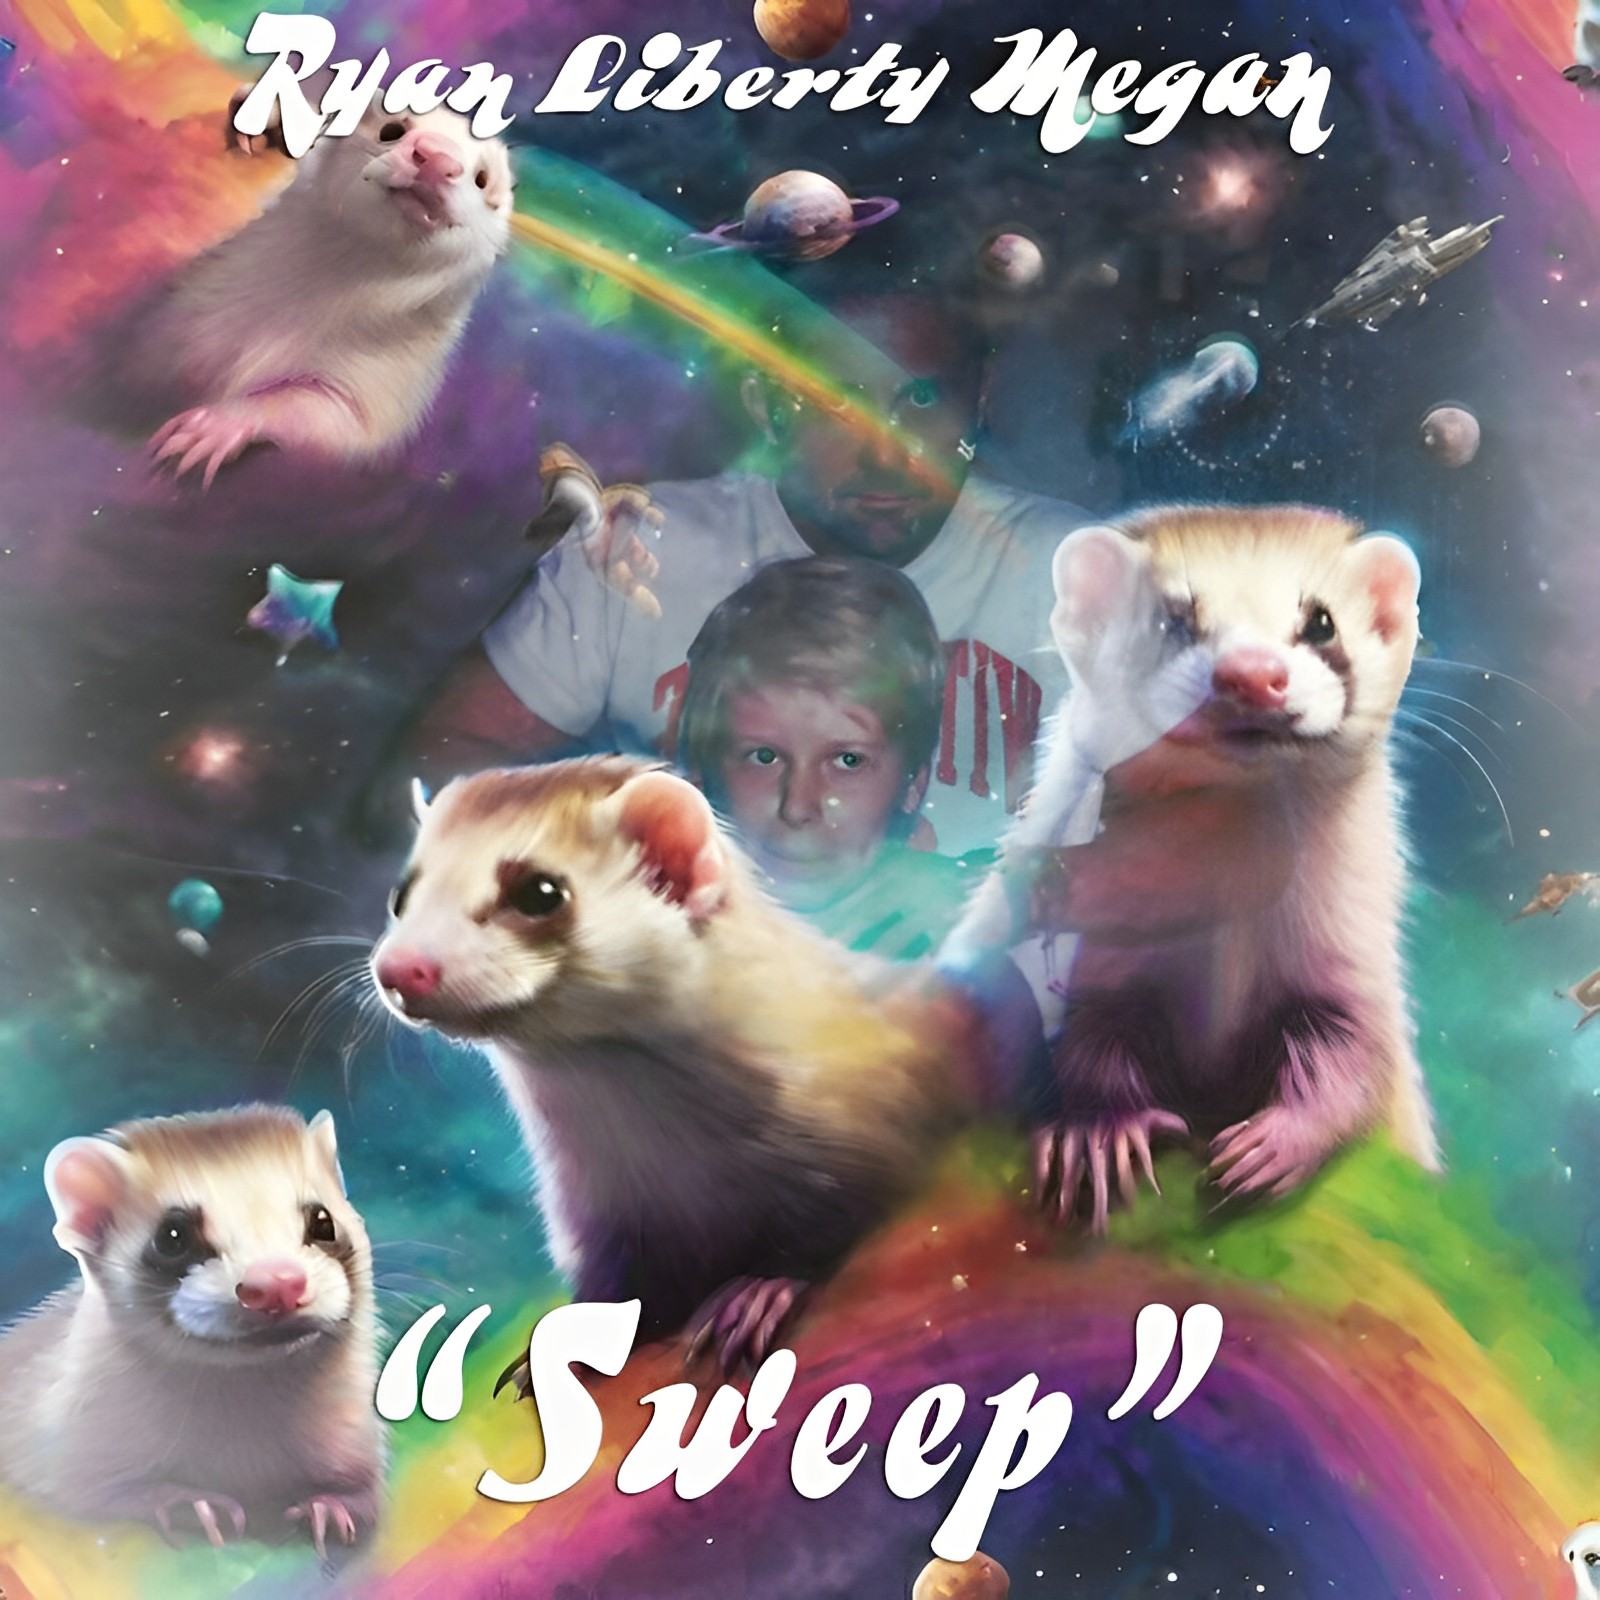 Ryan Liberty Megan "Sweep" single artwork